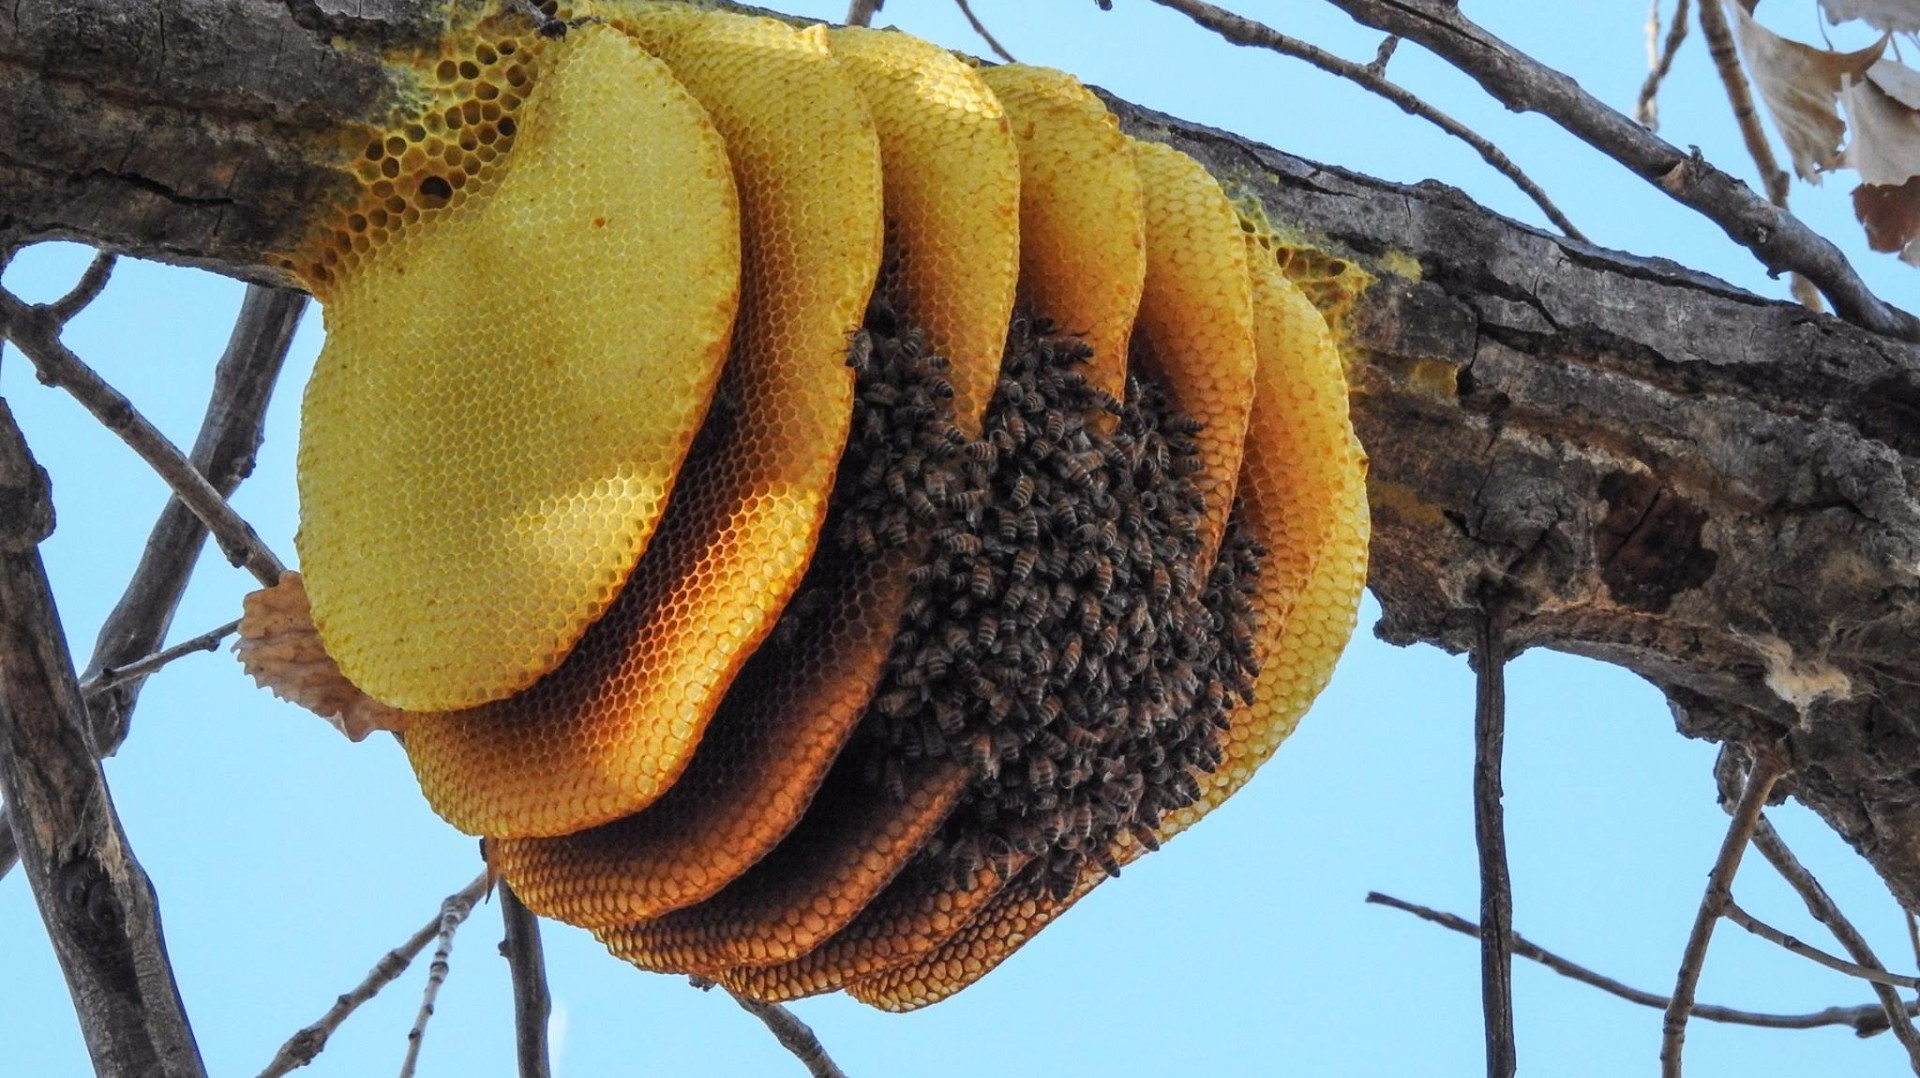 Honey bees create nest on branch | 9news.com